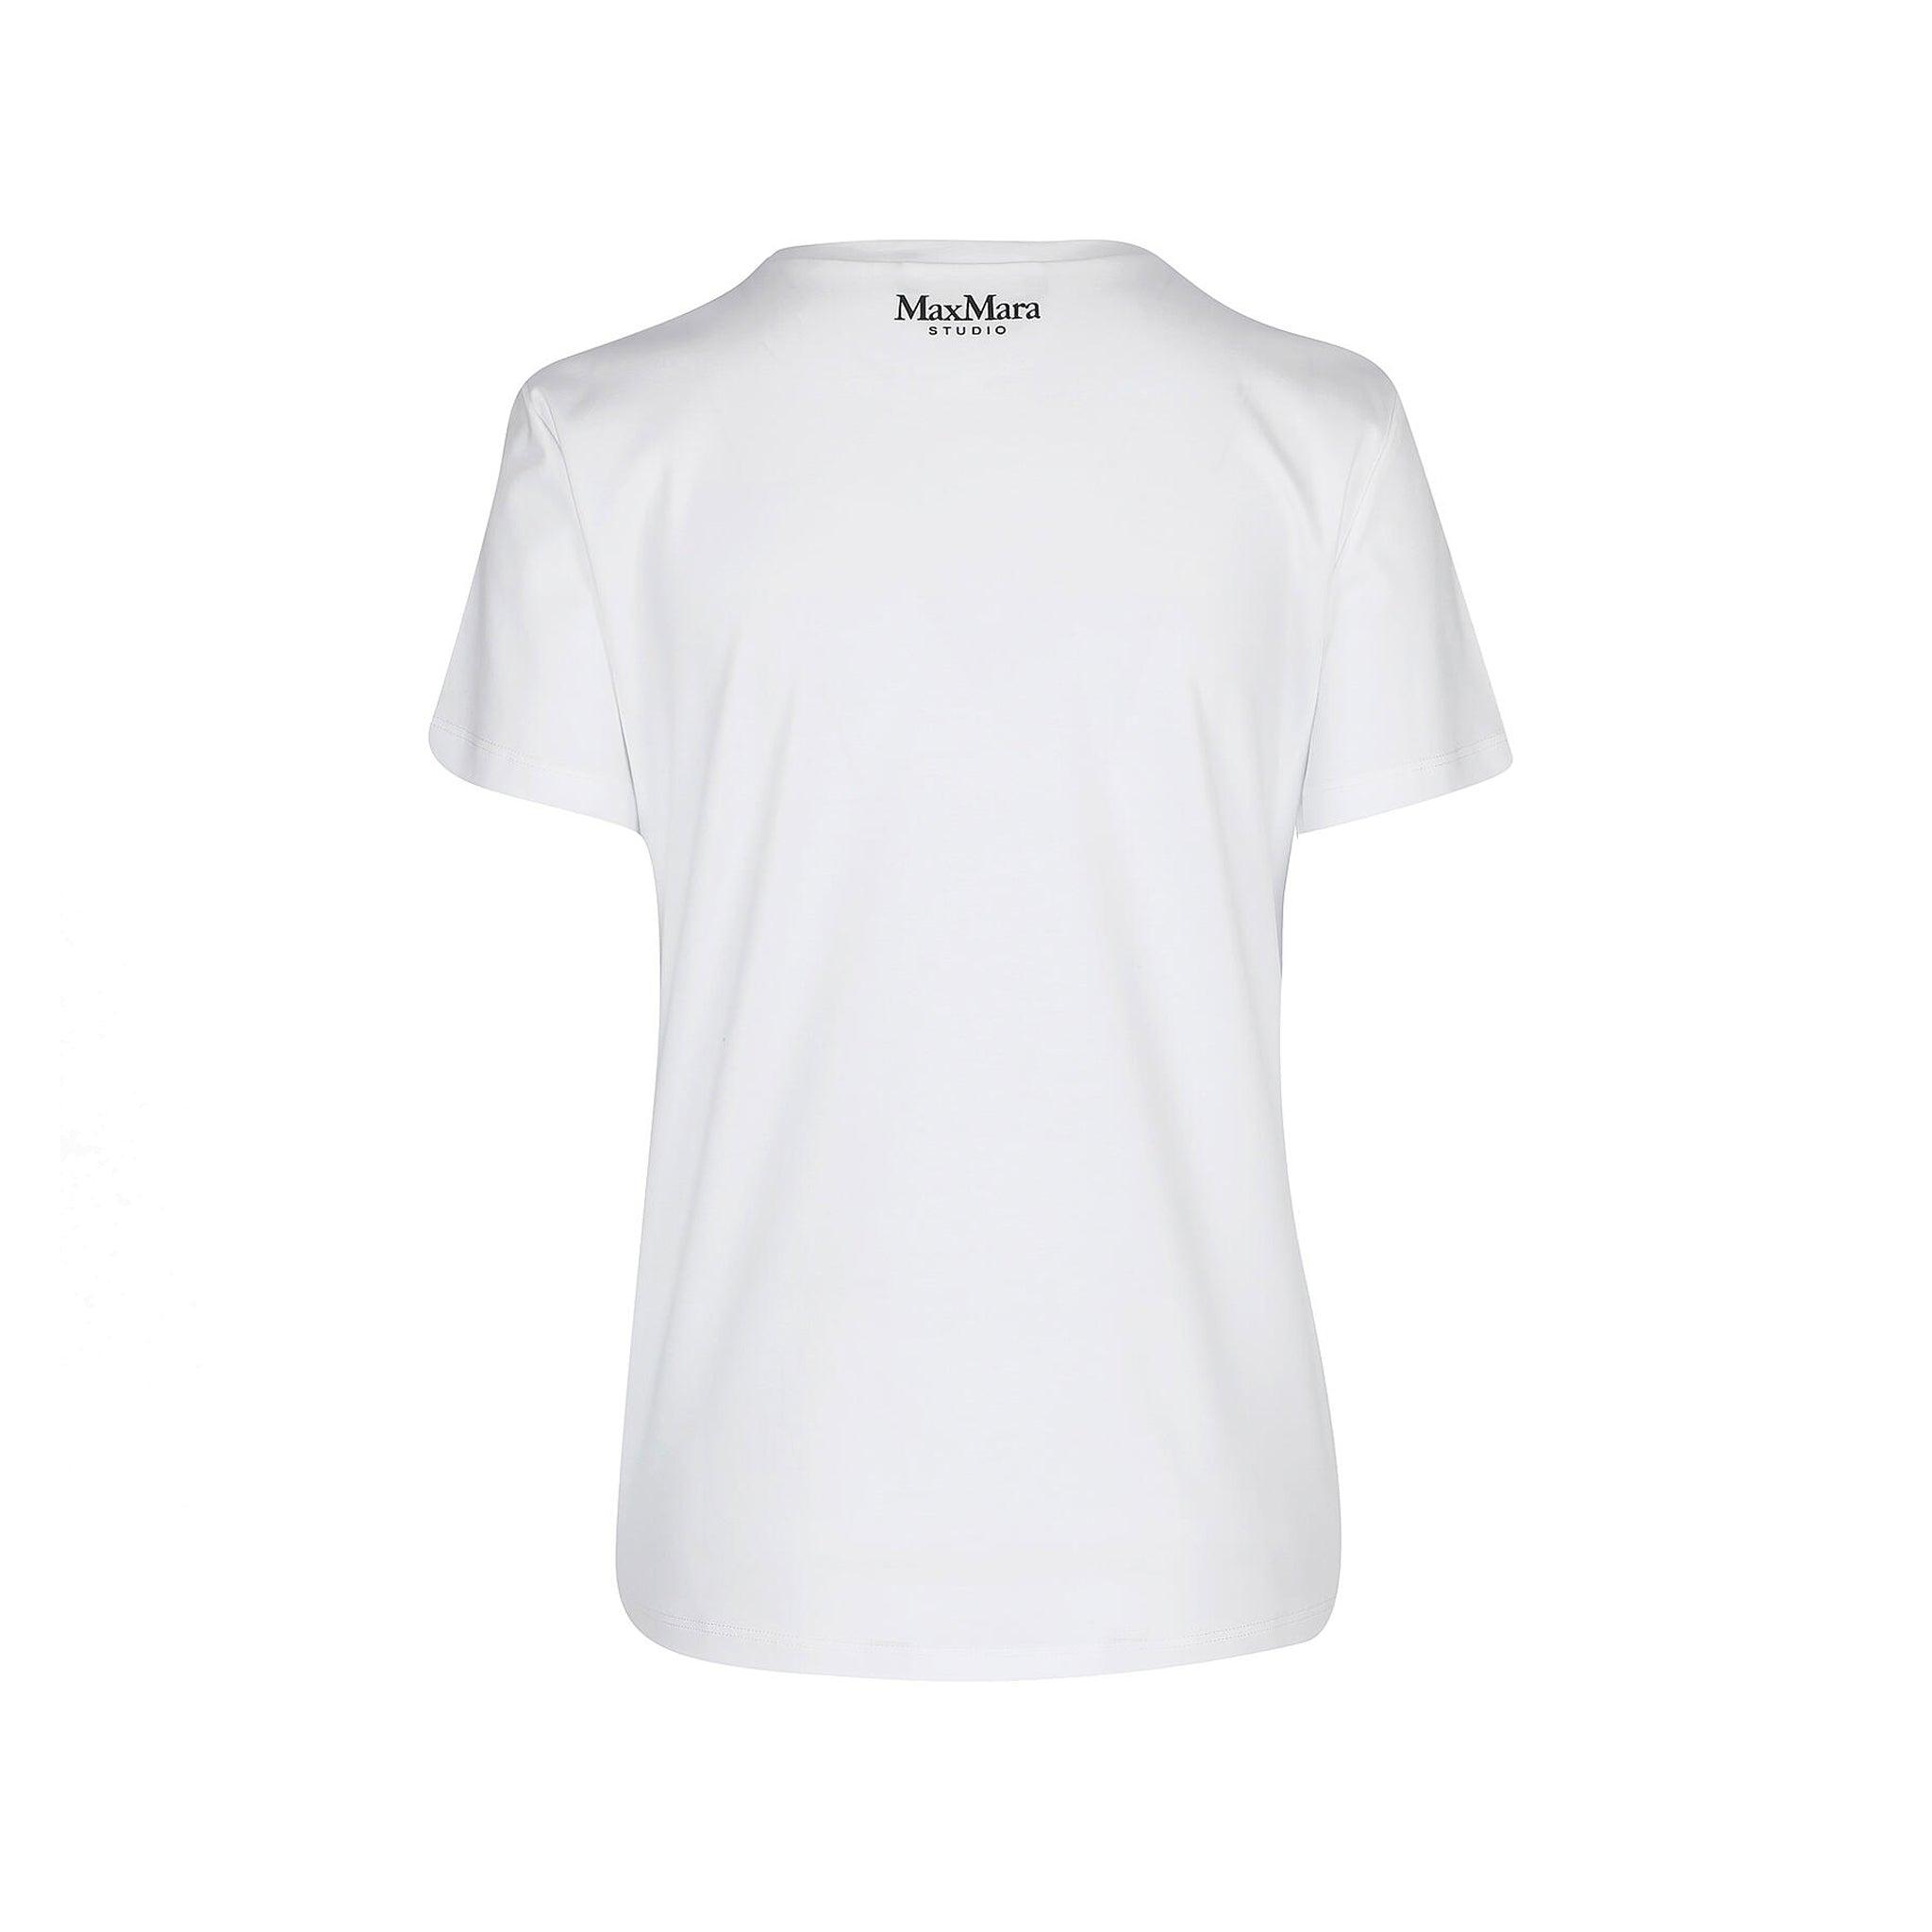 Max Mara Studio Cocco T-shirt in White | Lyst